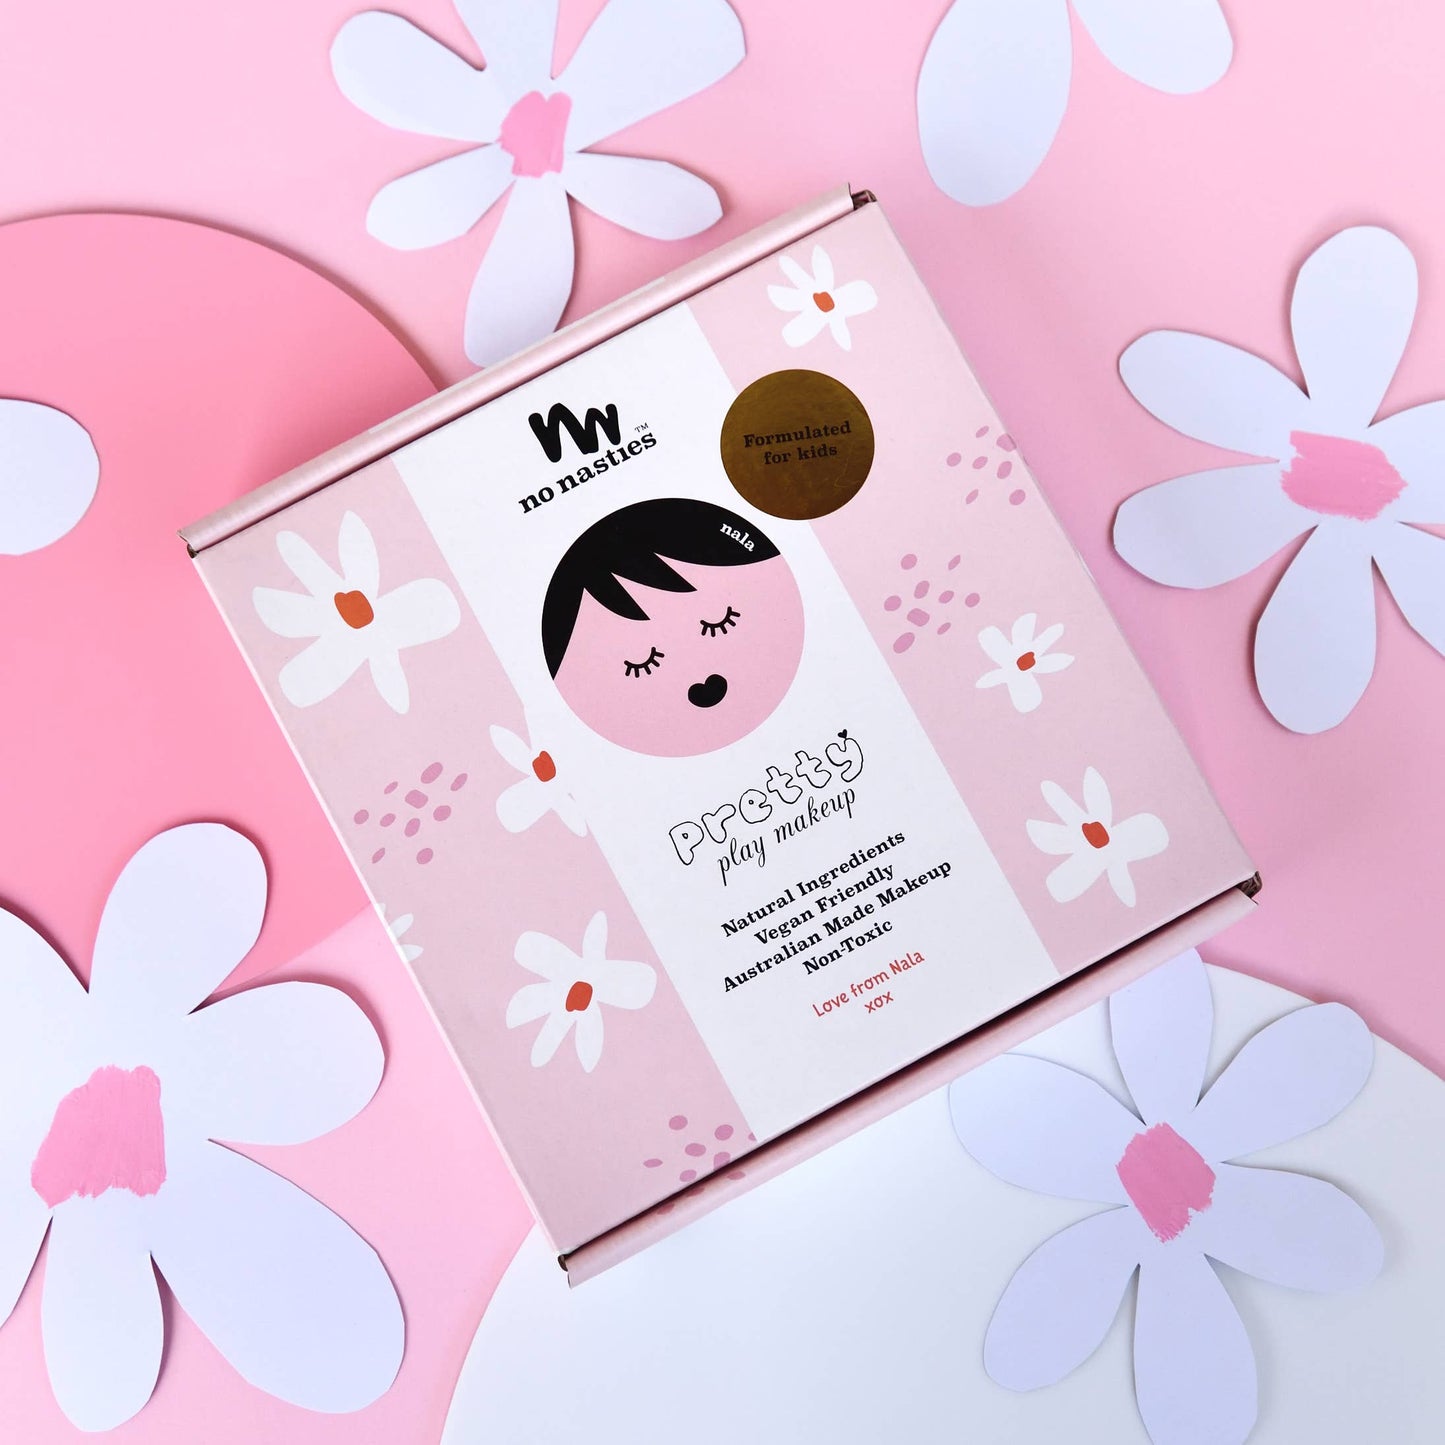 Nala Pink Pretty Play Kids Makeup Deluxe Box